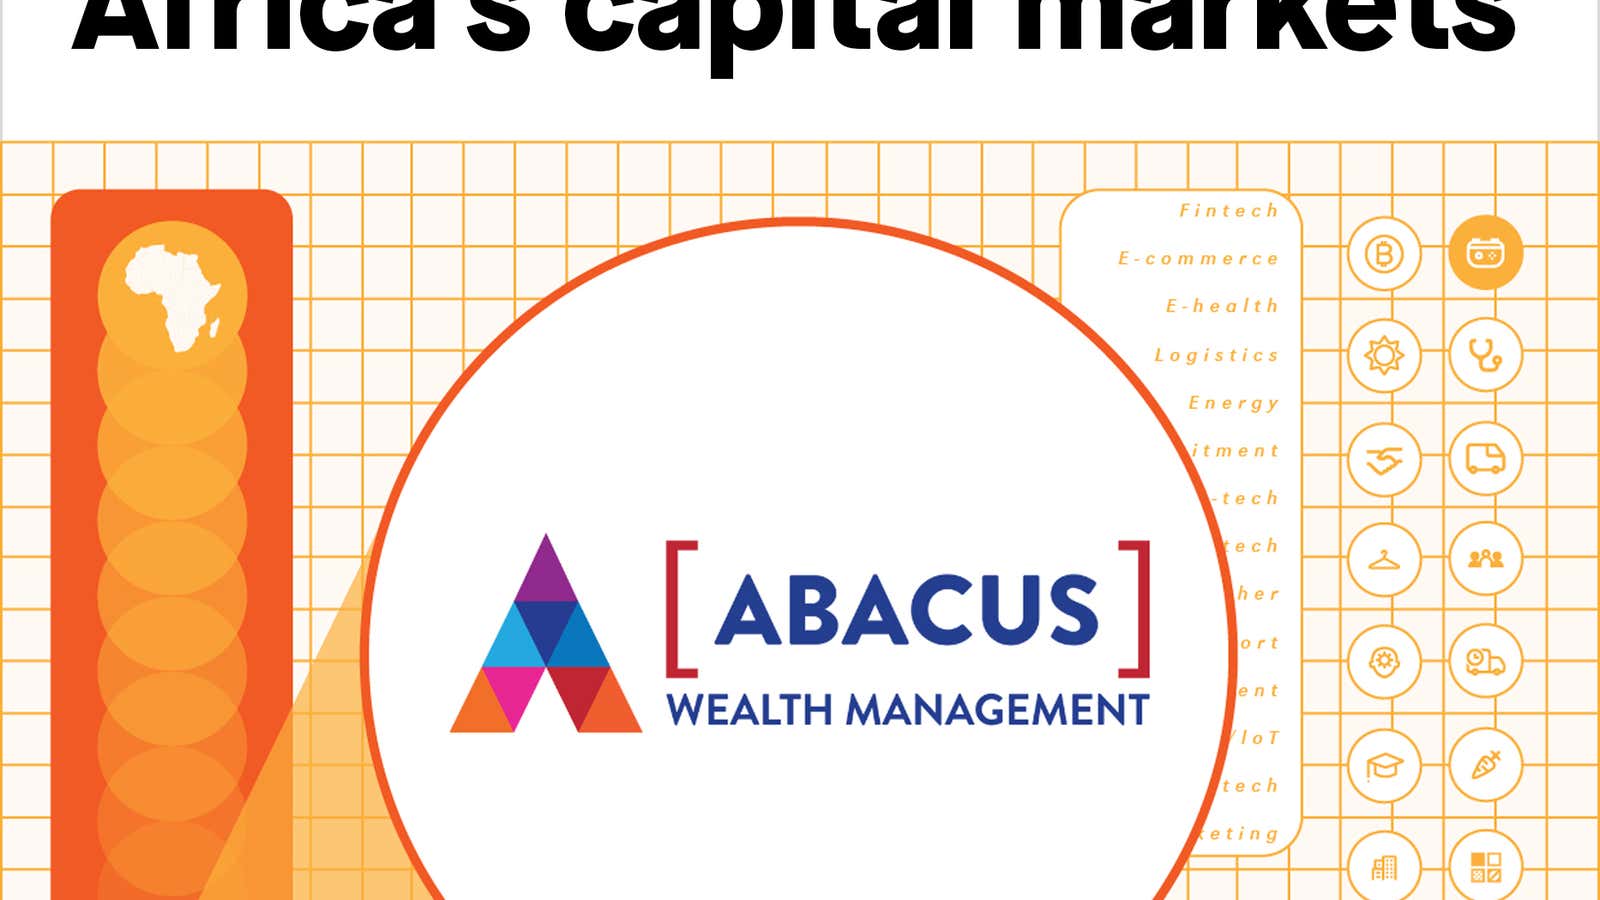 âœ¦ Making money in Africaâ€™s capital markets